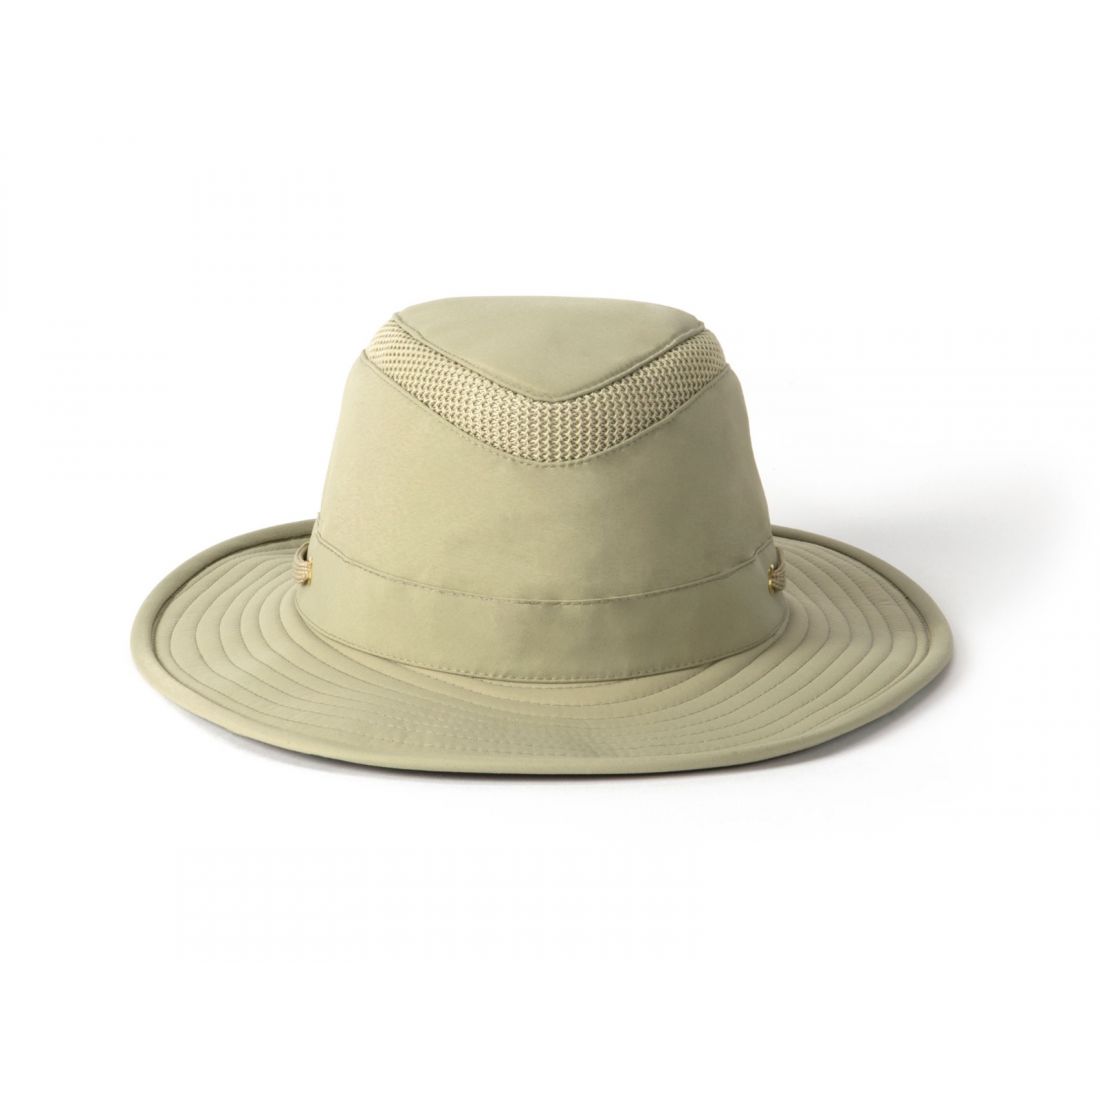 tilley-hats-ltm-6-airflo-broad-brim-khaki-0-1.jpg